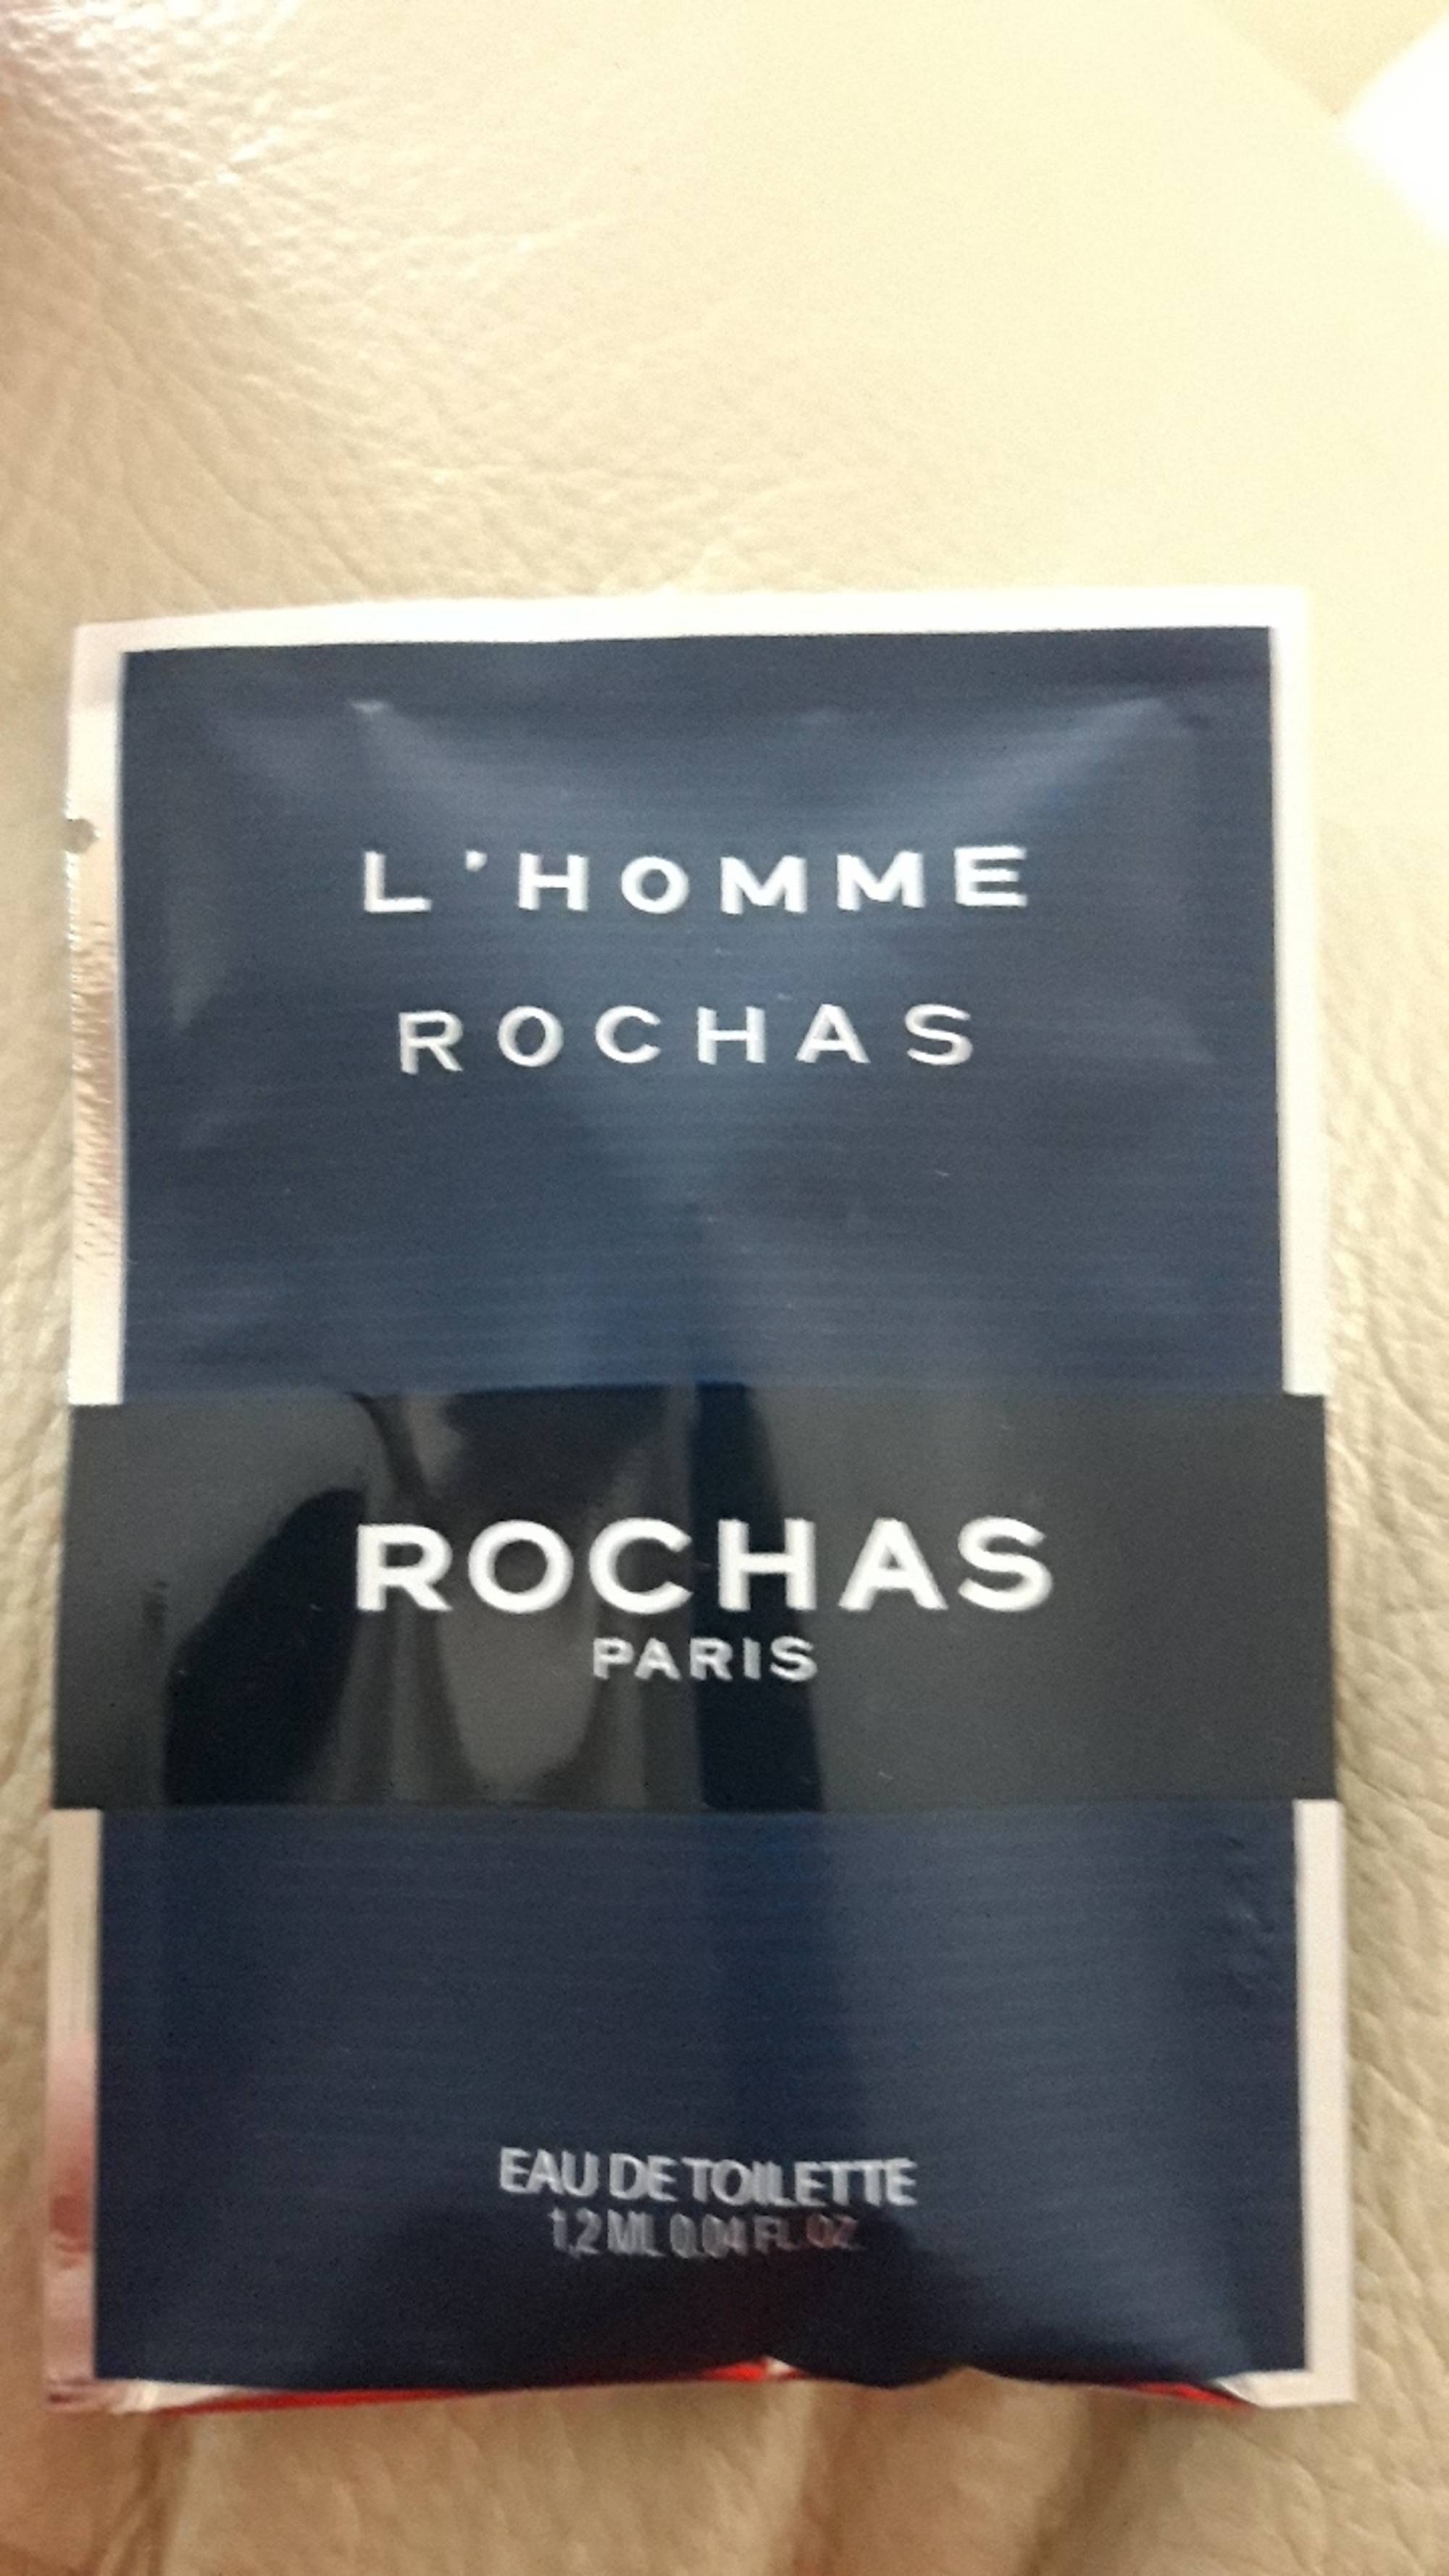 ROCHAS - L'homme Rochas - Eau de toilette